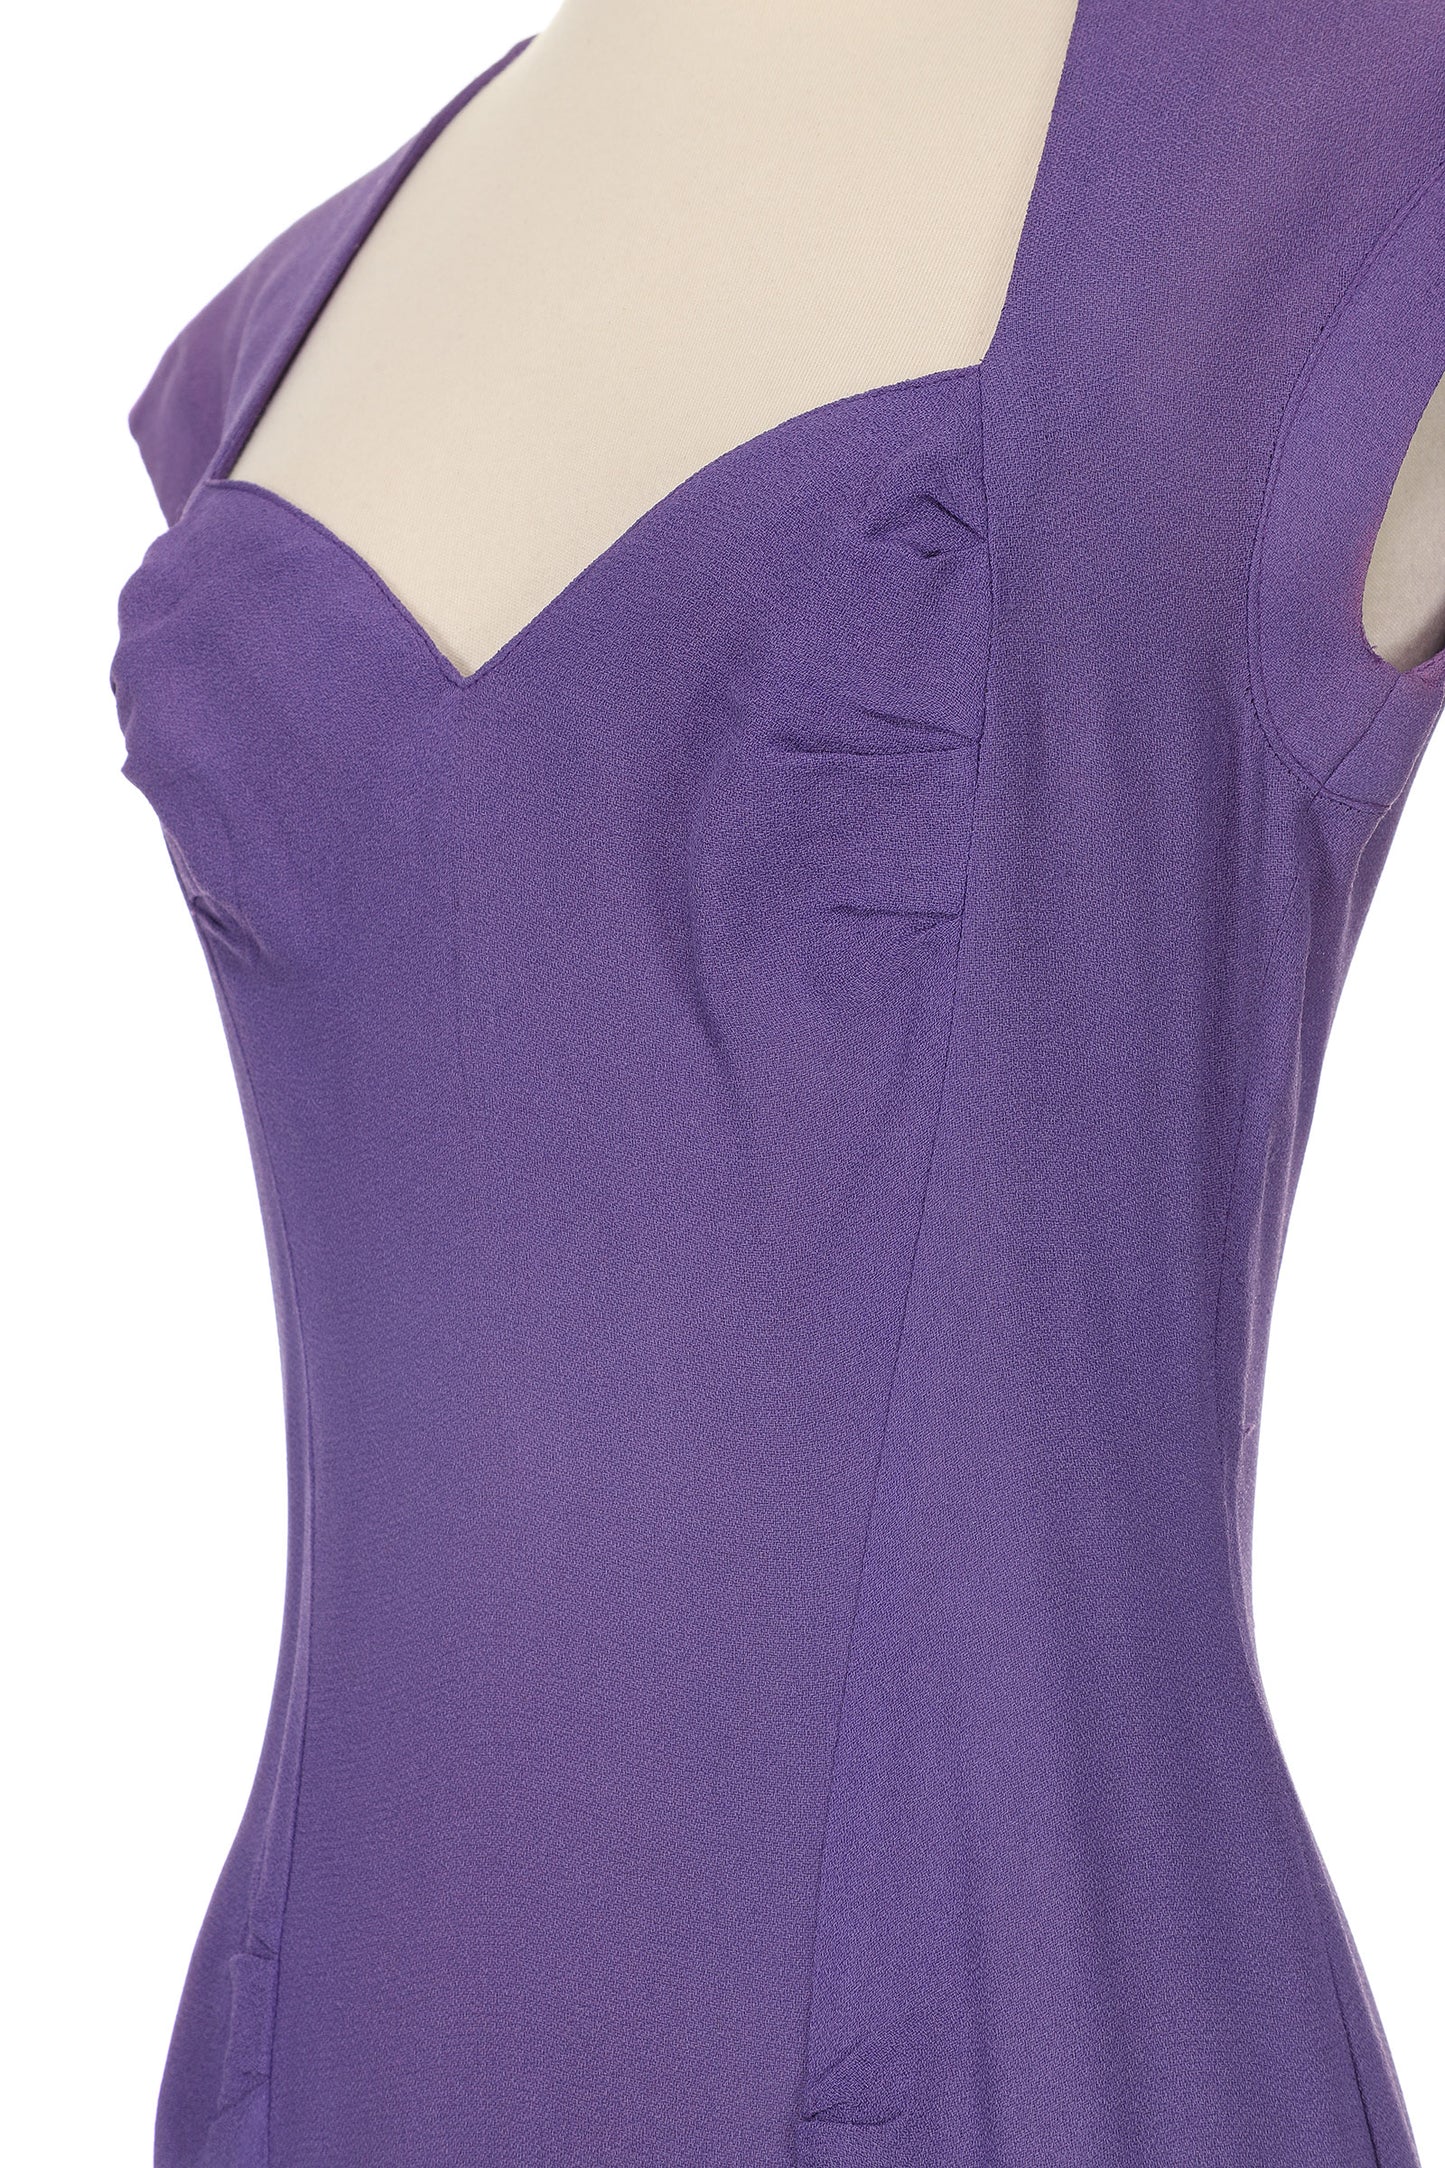 Ossie Clark for Radley 1970's Purple Dress